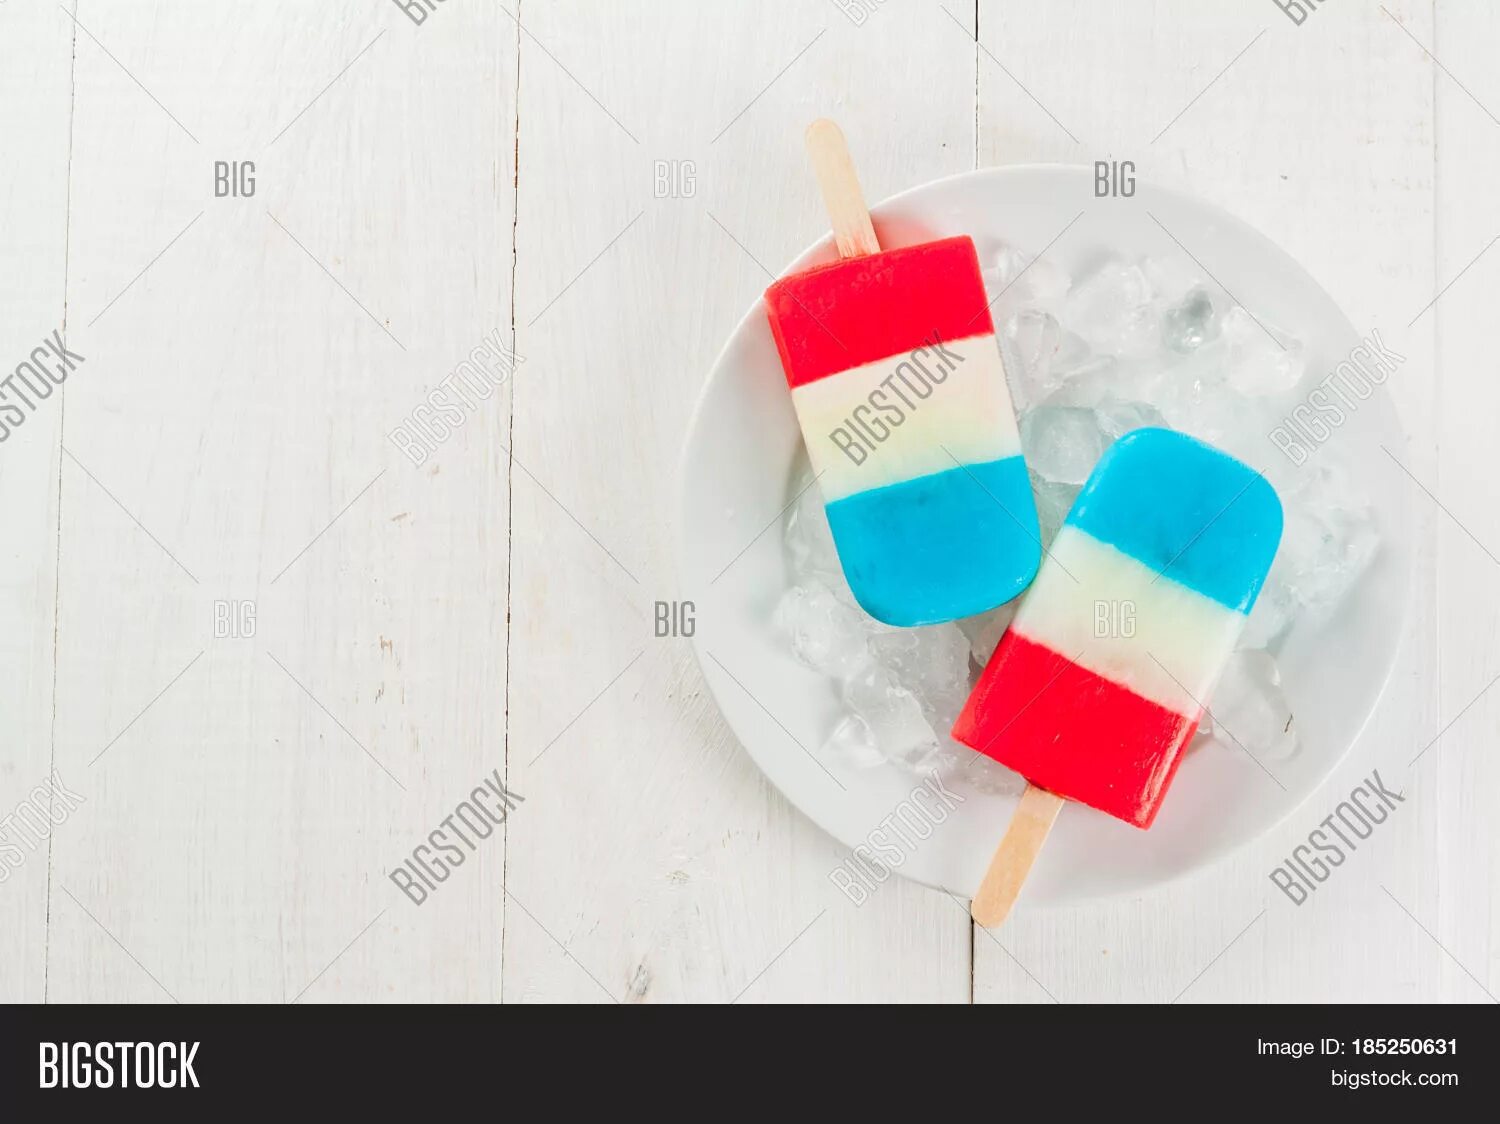 Мороженое бело сине красное. Красно голубое мороженое. Красно синий белый фруктовый лёд.